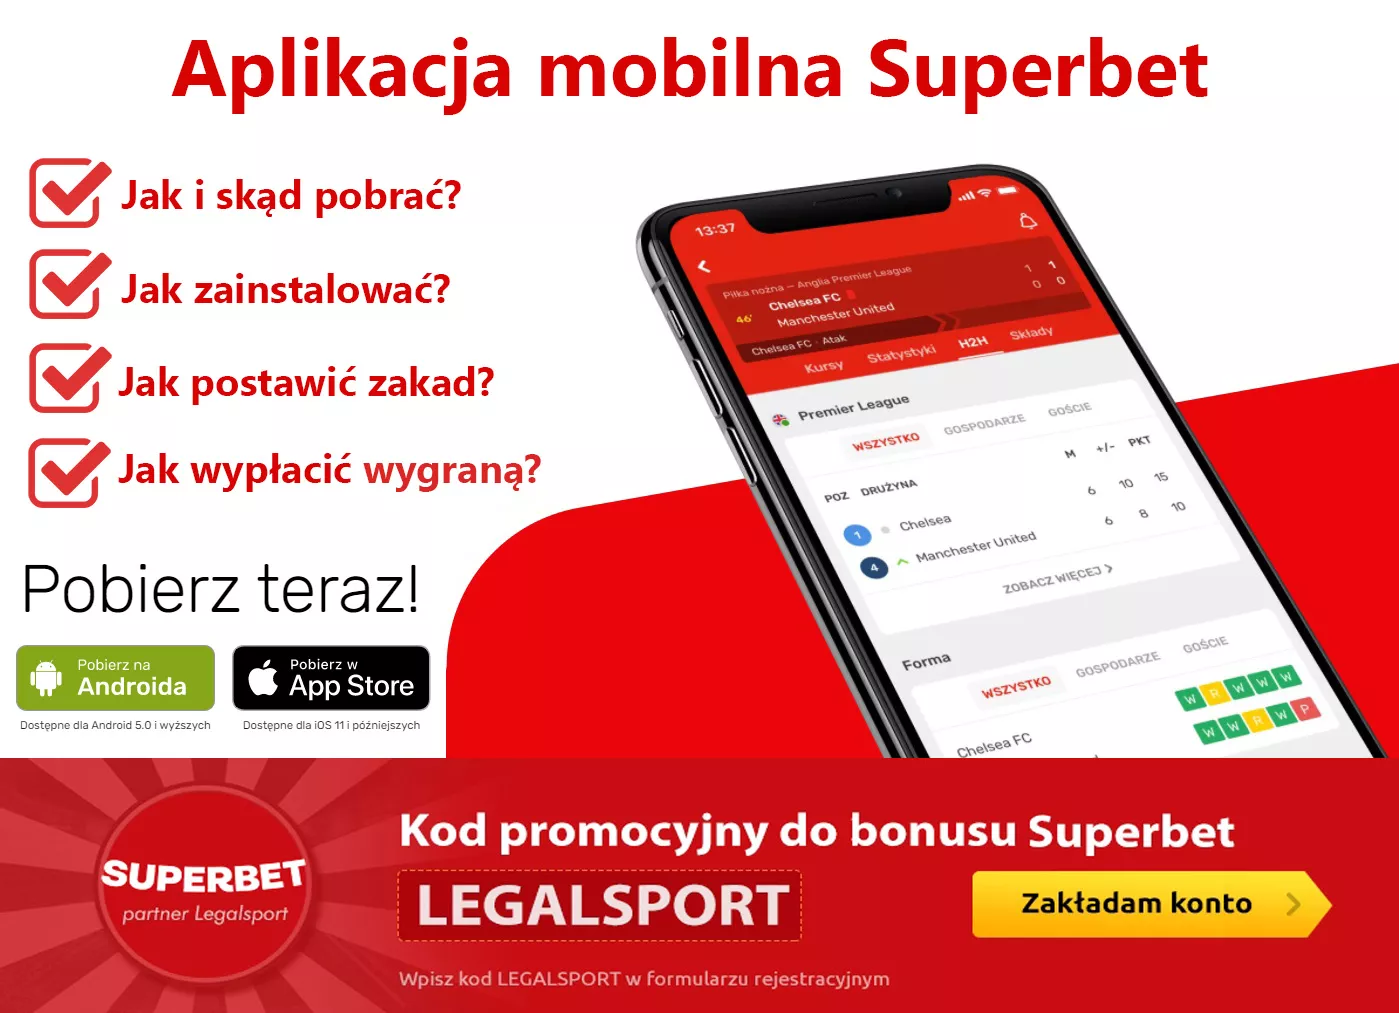 Aplikacja mobilna Superbet